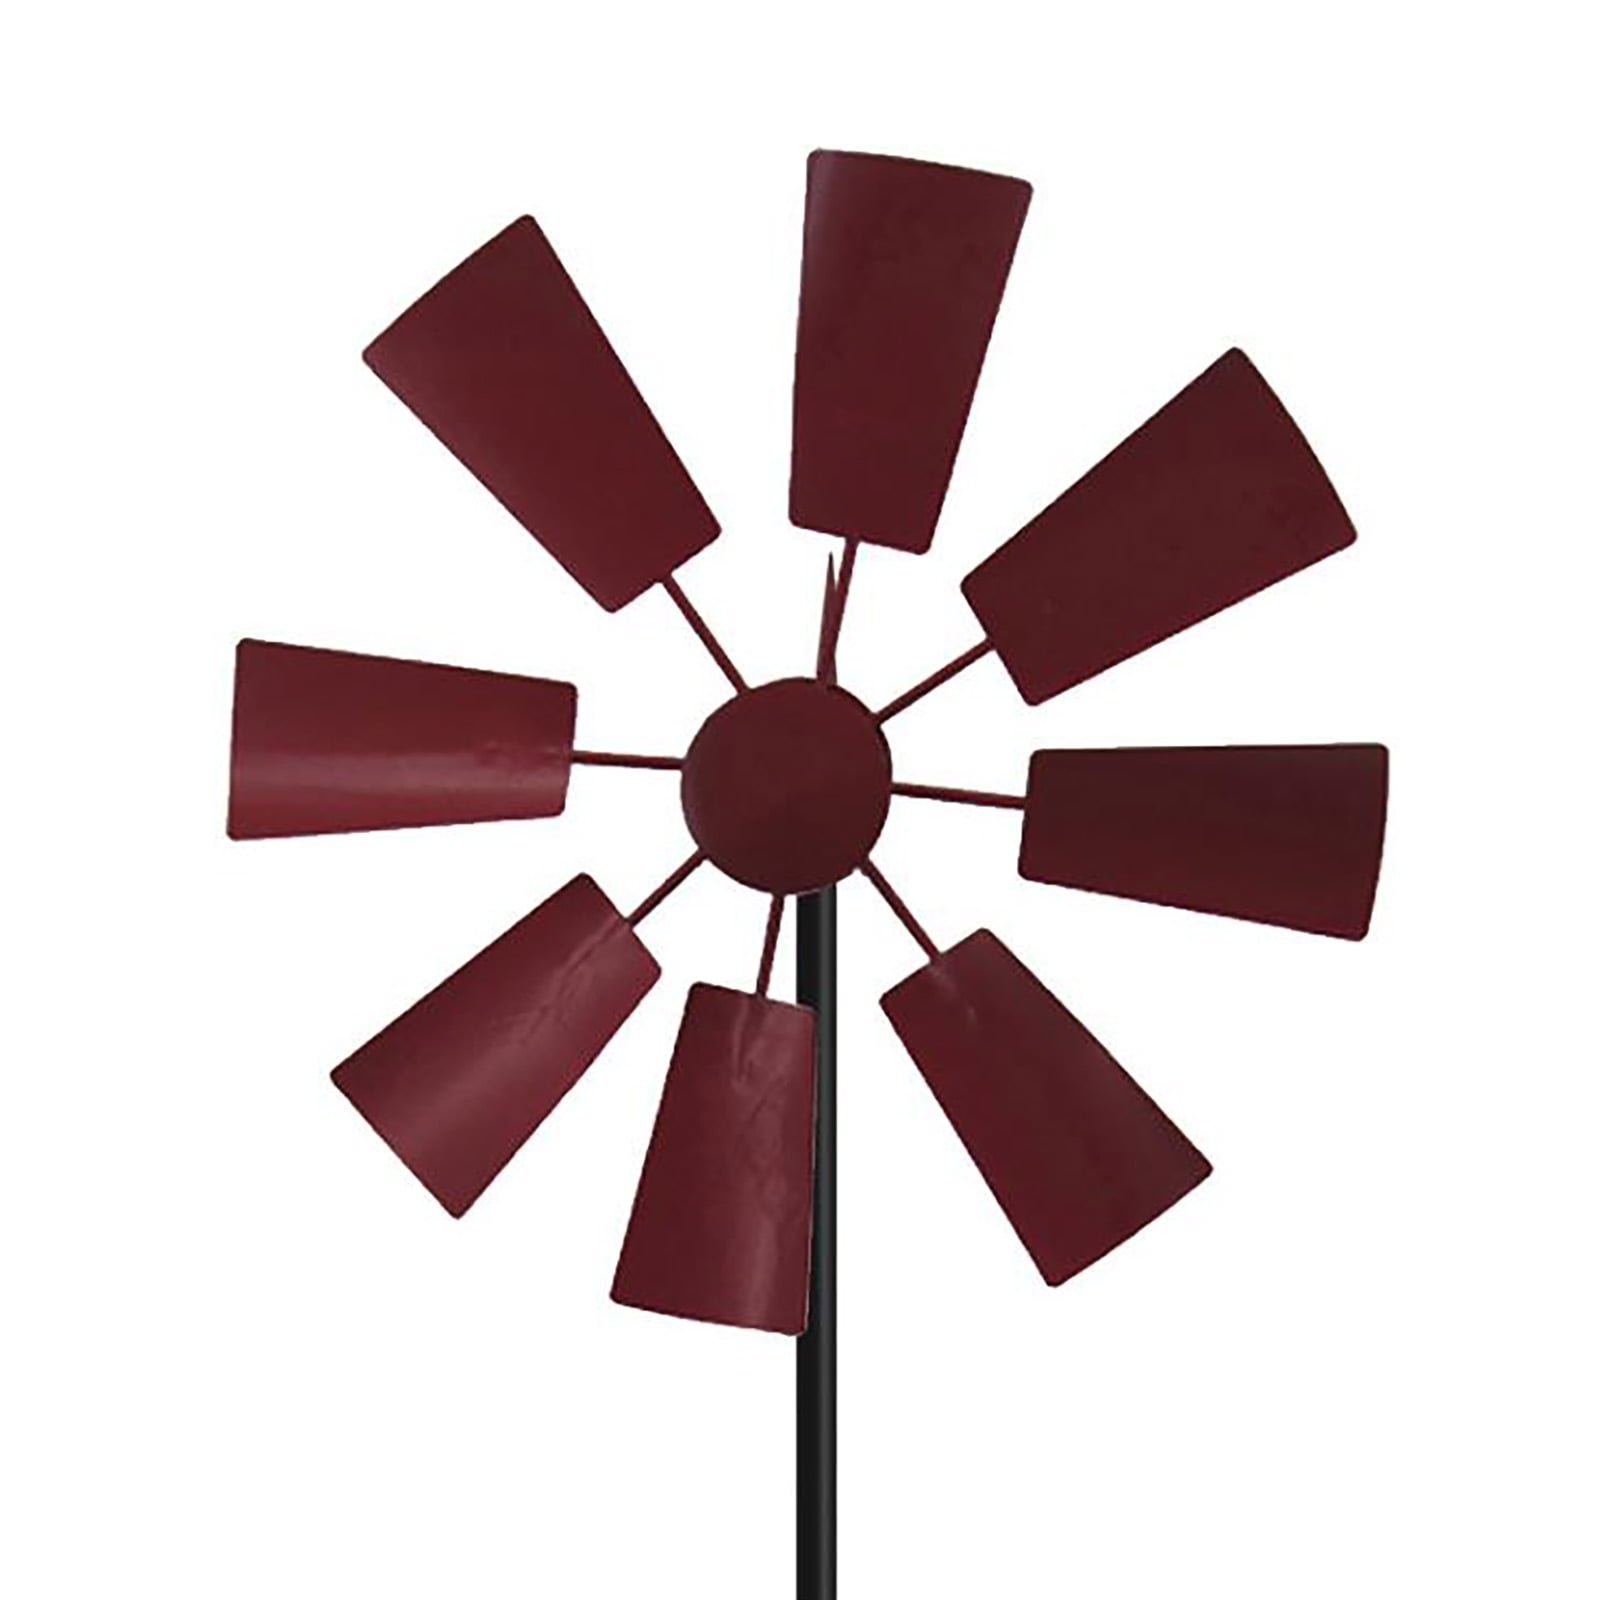 Fairy Ballerina Wind Spinner Garden stake Windmill Sculpture for Outdoor Art Dec